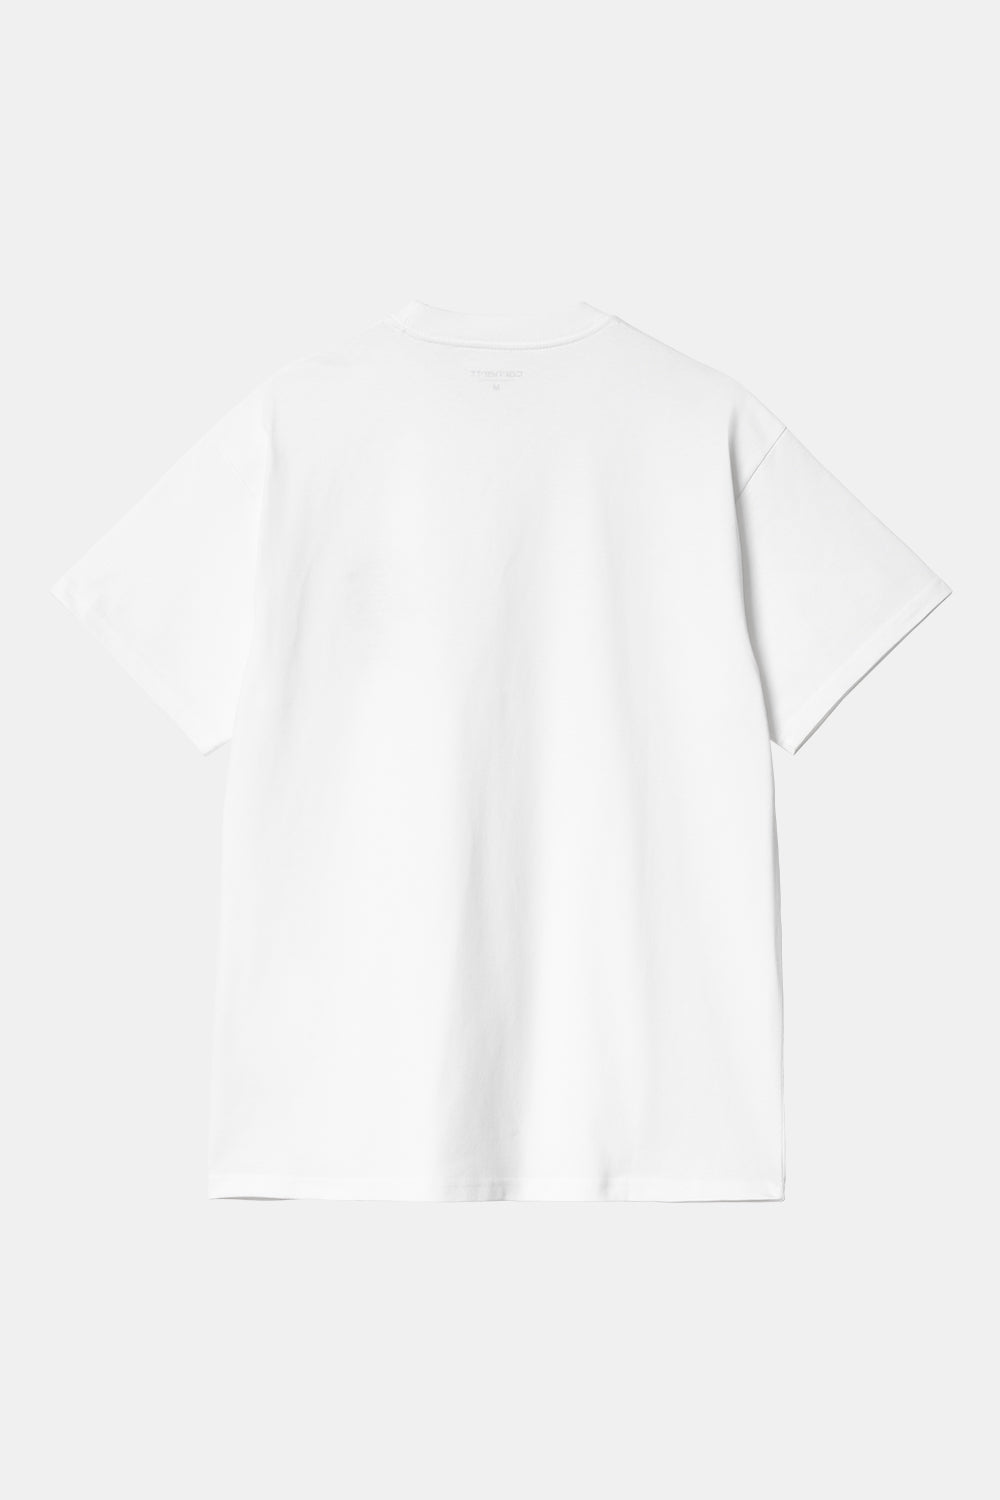 Carhartt WIP Short Sleeve Icons T-Shirt (White/Black)